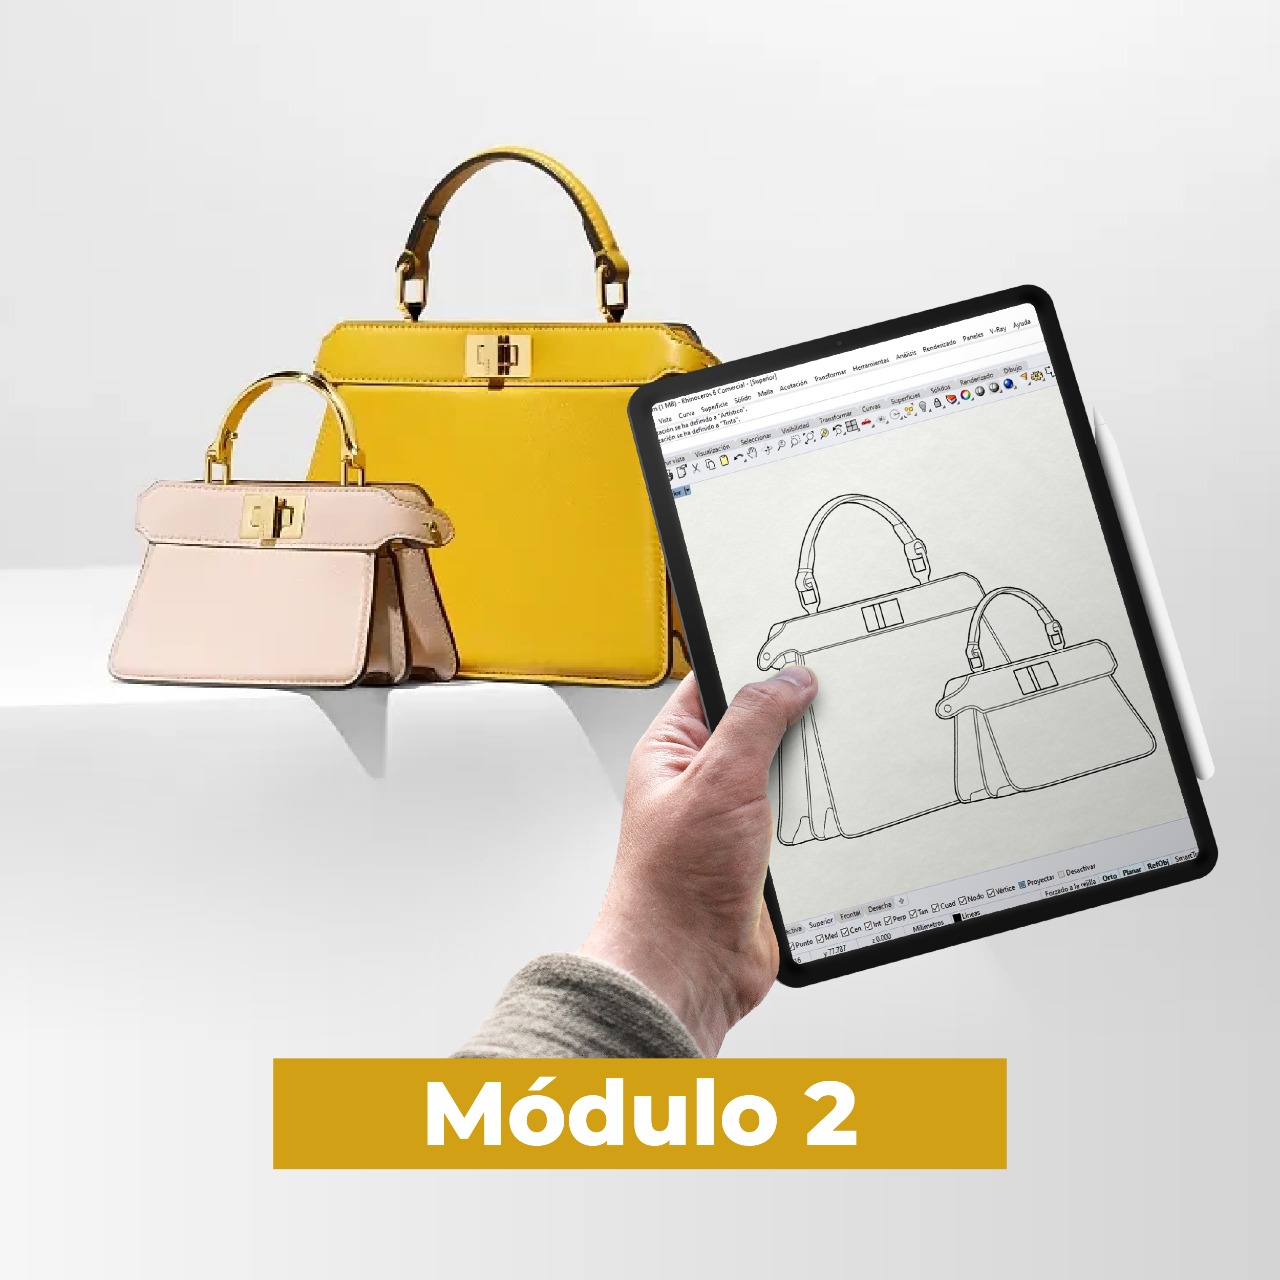 Capacitación modular en diseño e ilustración digital de marroquinería - M2